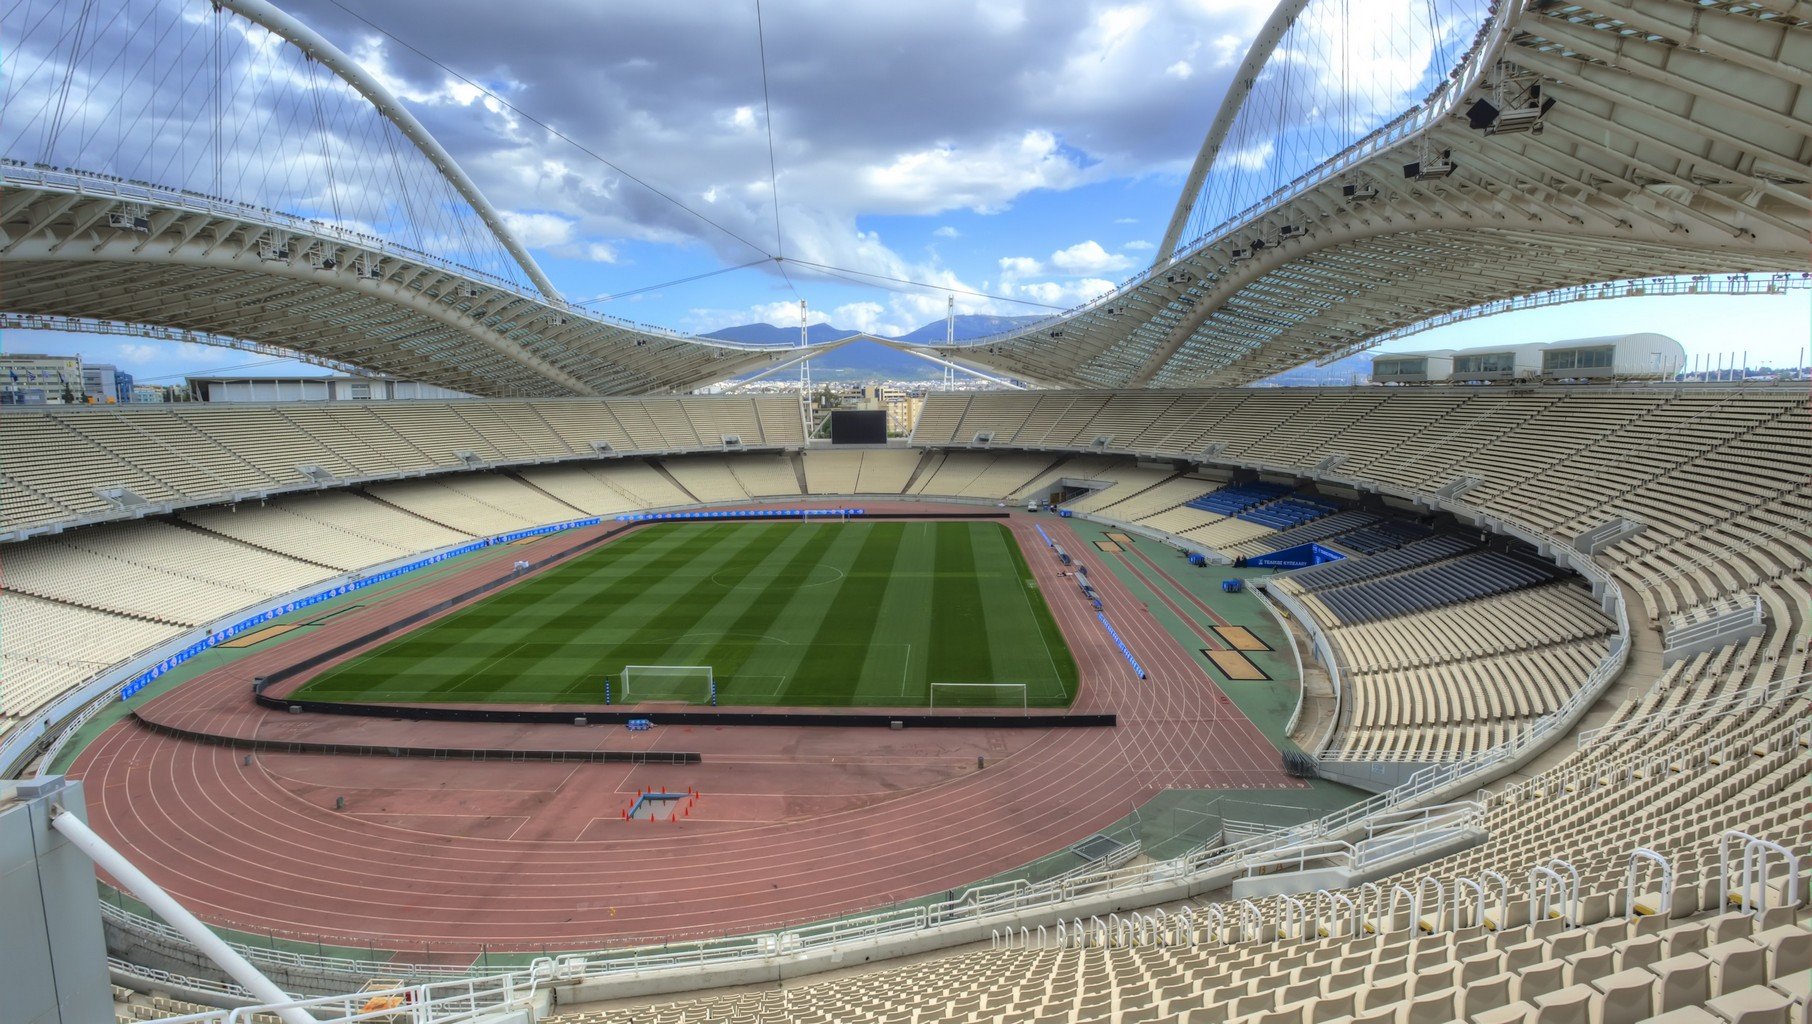 More information about "Στο Υπουργείο Υποδομών τα έργα του Ολυμπιακού Σταδίου της Αθήνας"